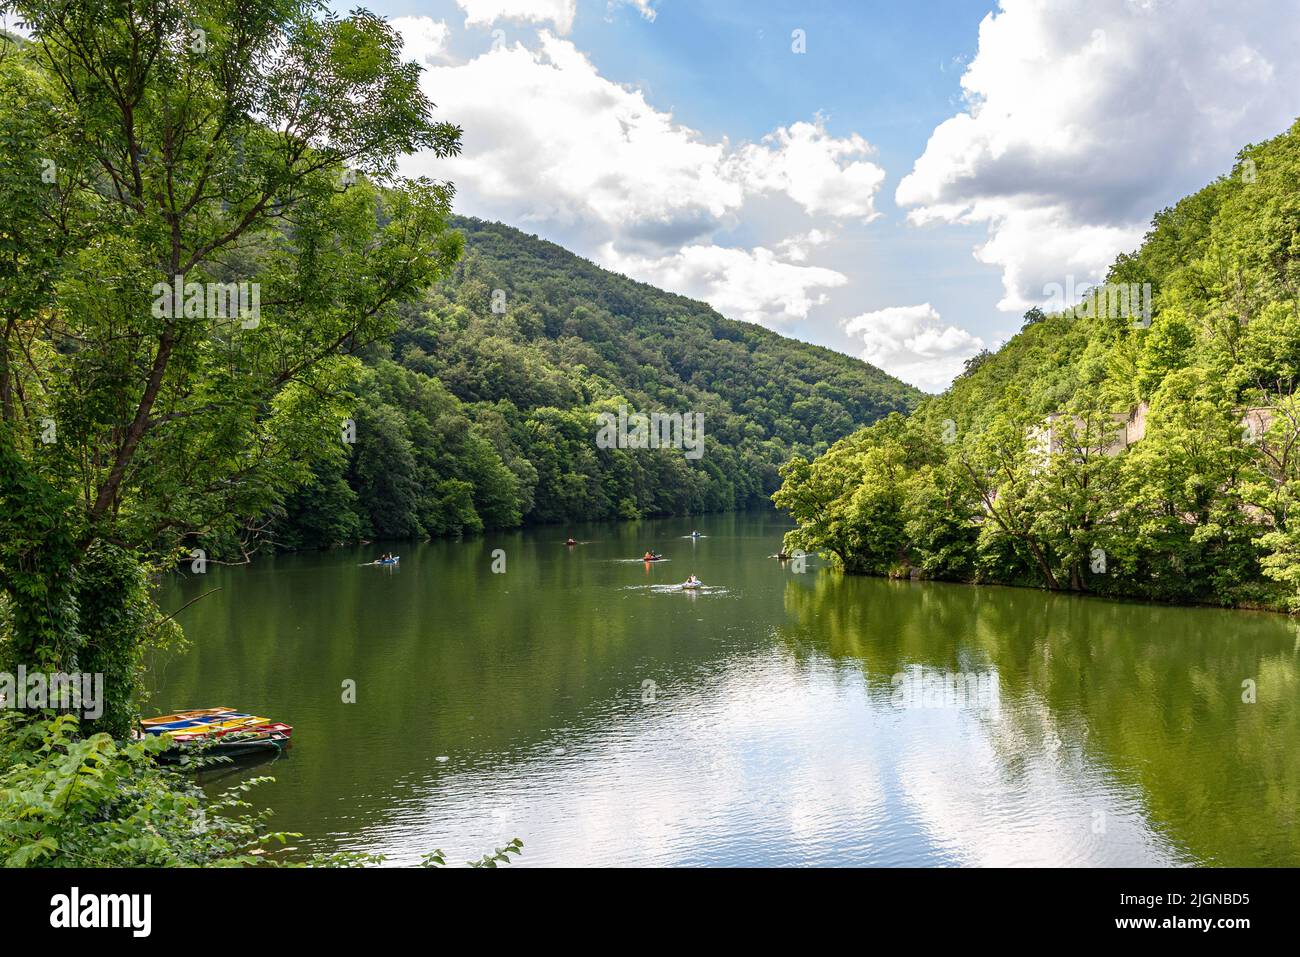 People boating on Hamori Lake in the Bukk Mountains in Lillafured, Hungary Stock Photo